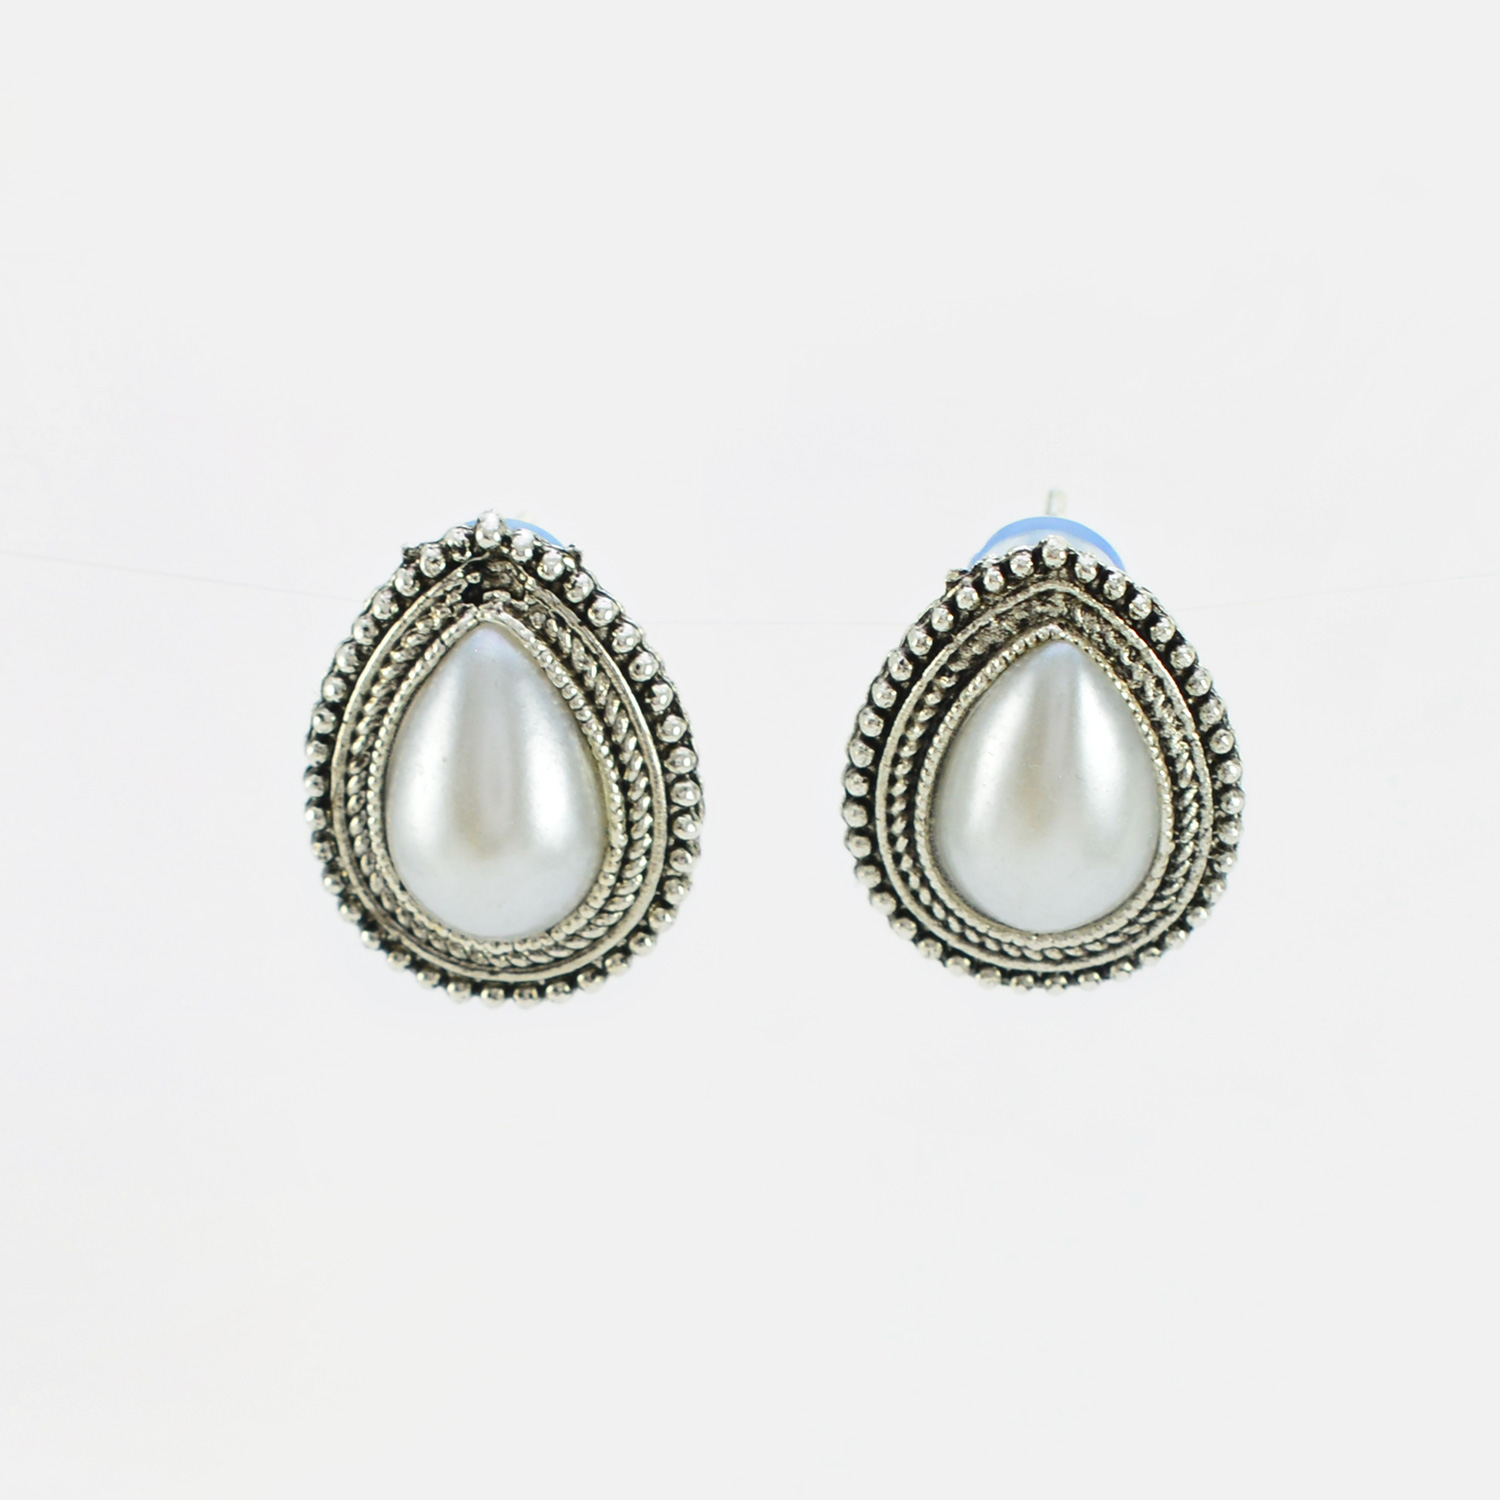 Superb White Pearls Earrings set